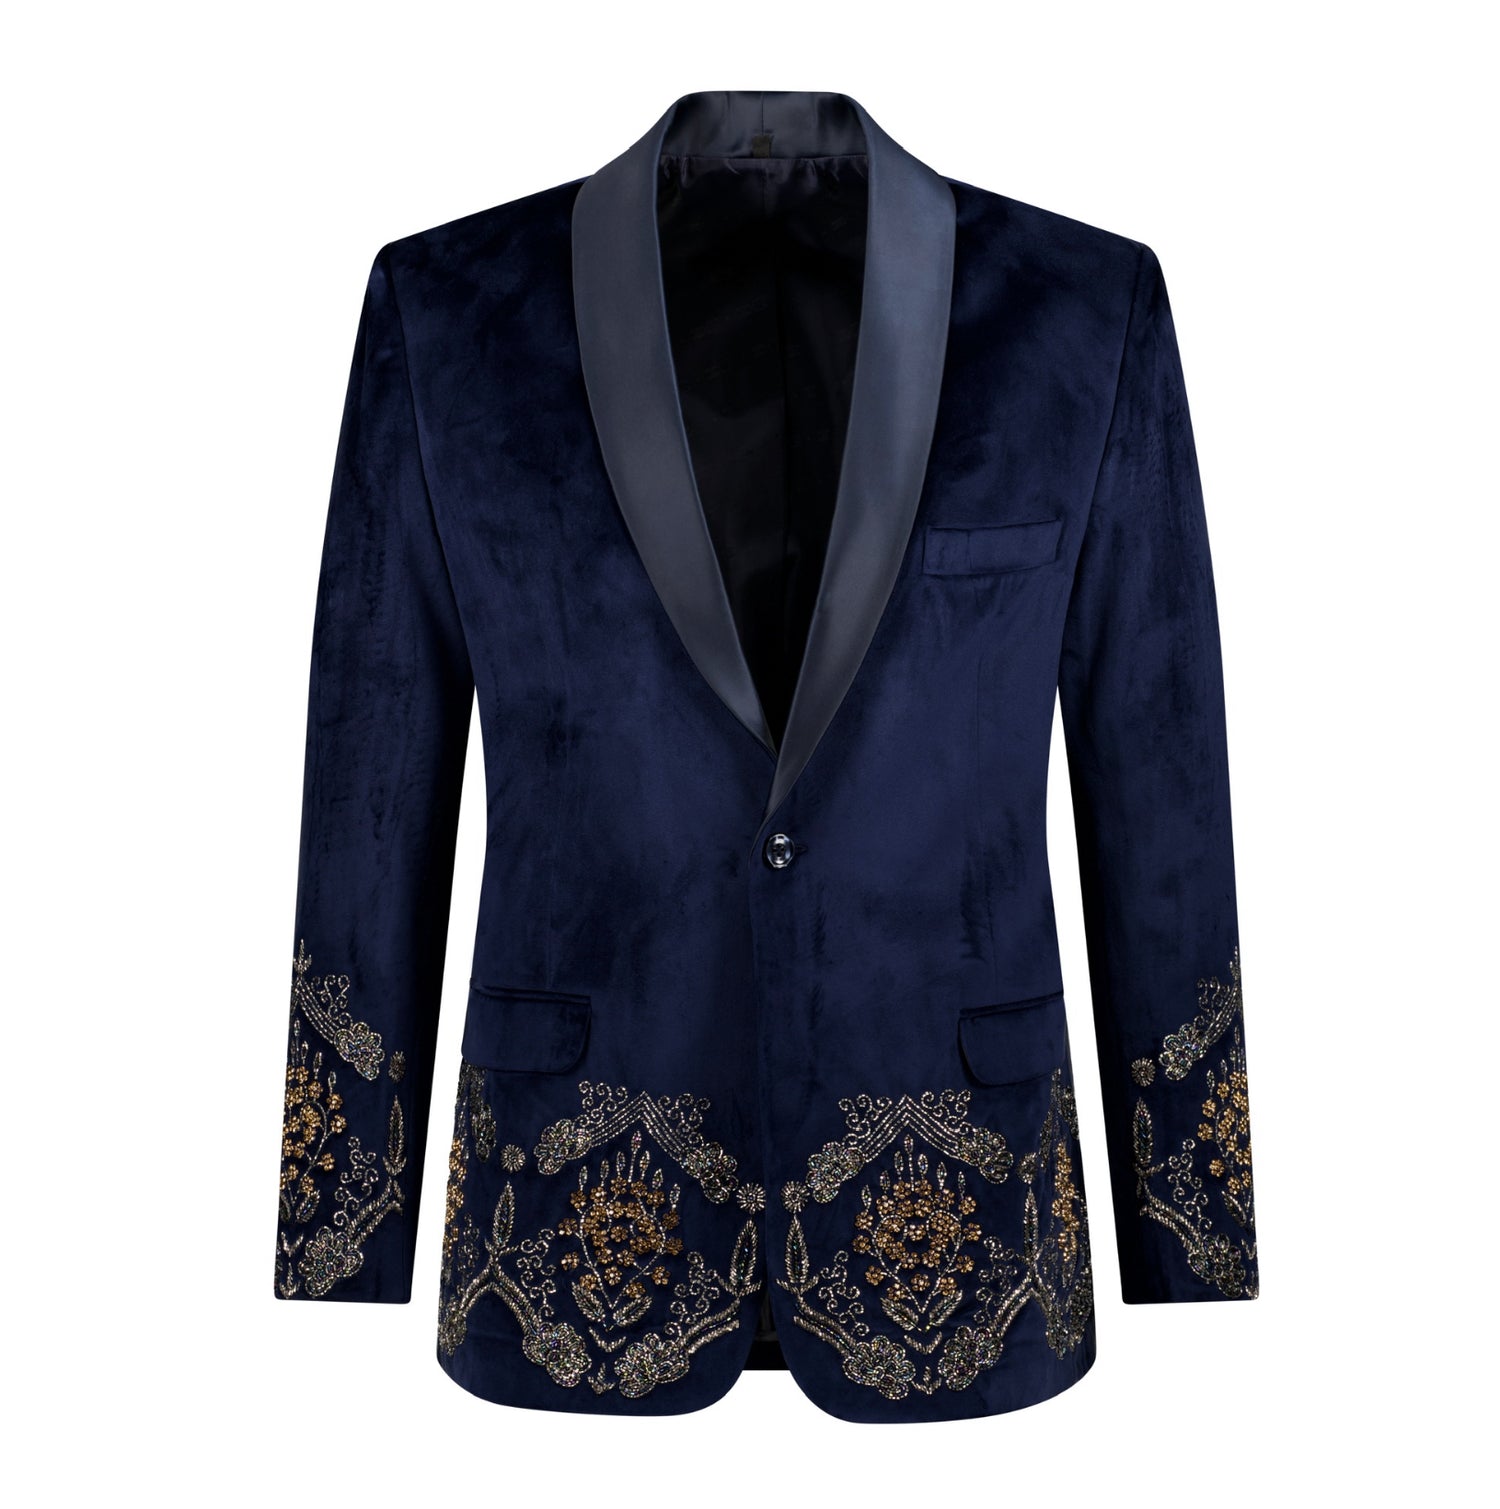 The Amalfi Crystal Beaded Jacket - Jacket by Urbbana